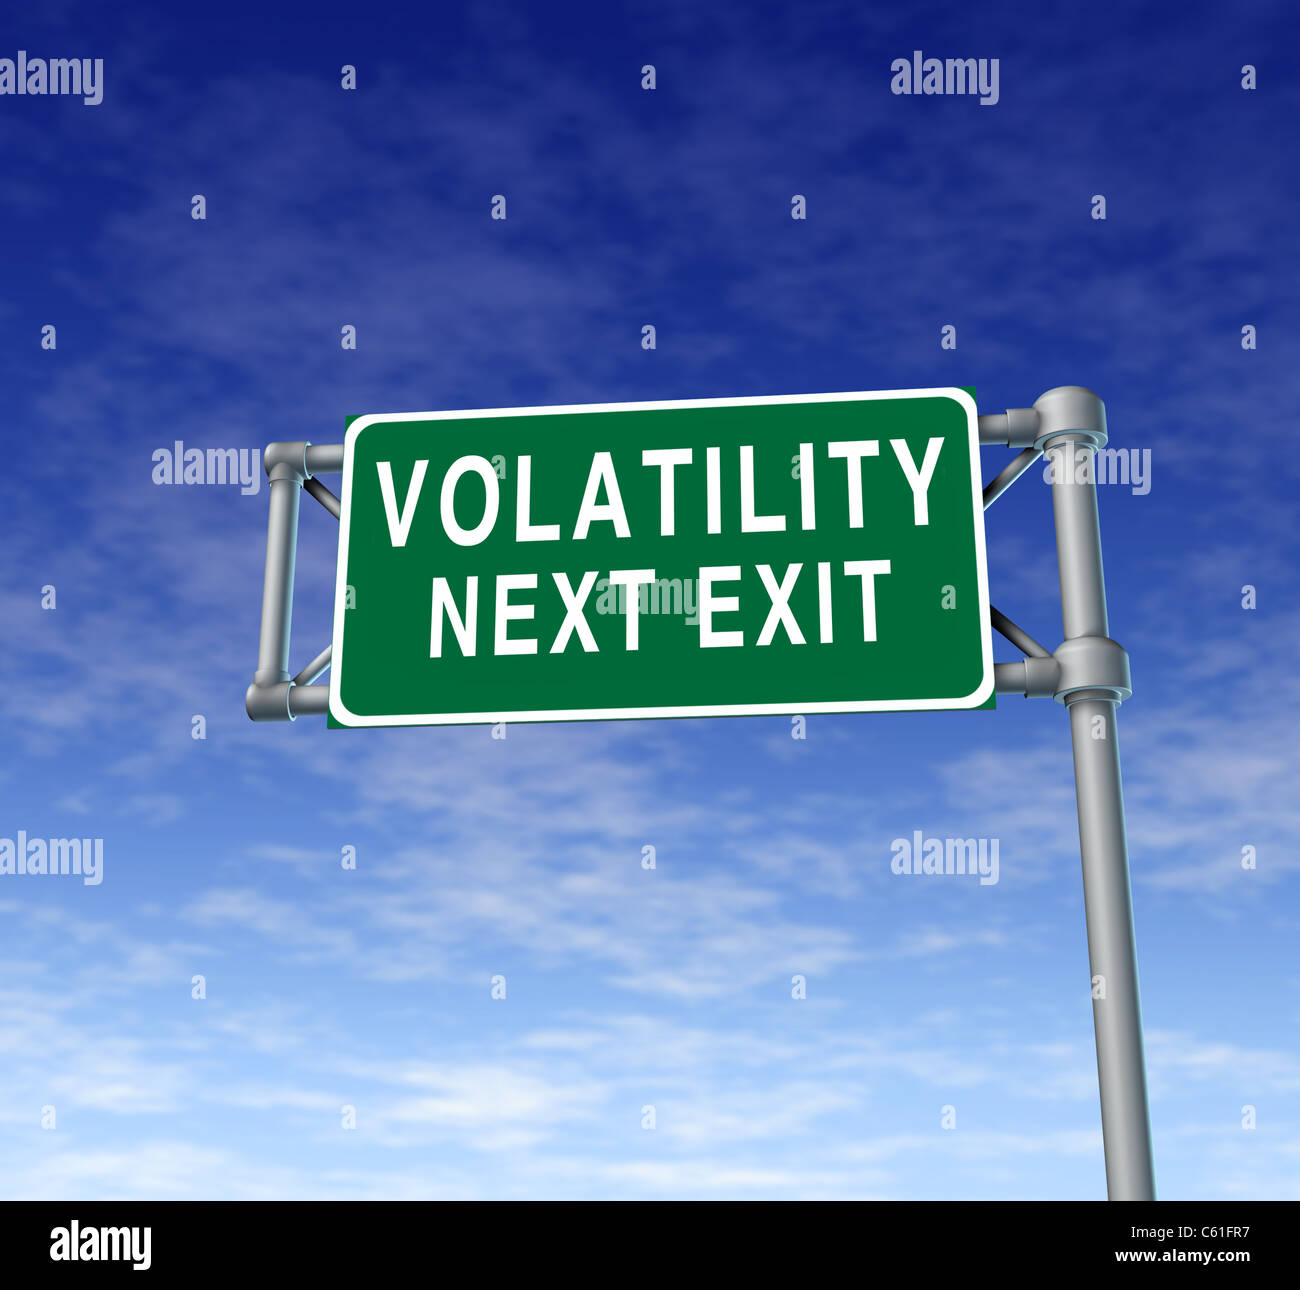 Volatile uncertainty in regards to the stock market. Stock Photo